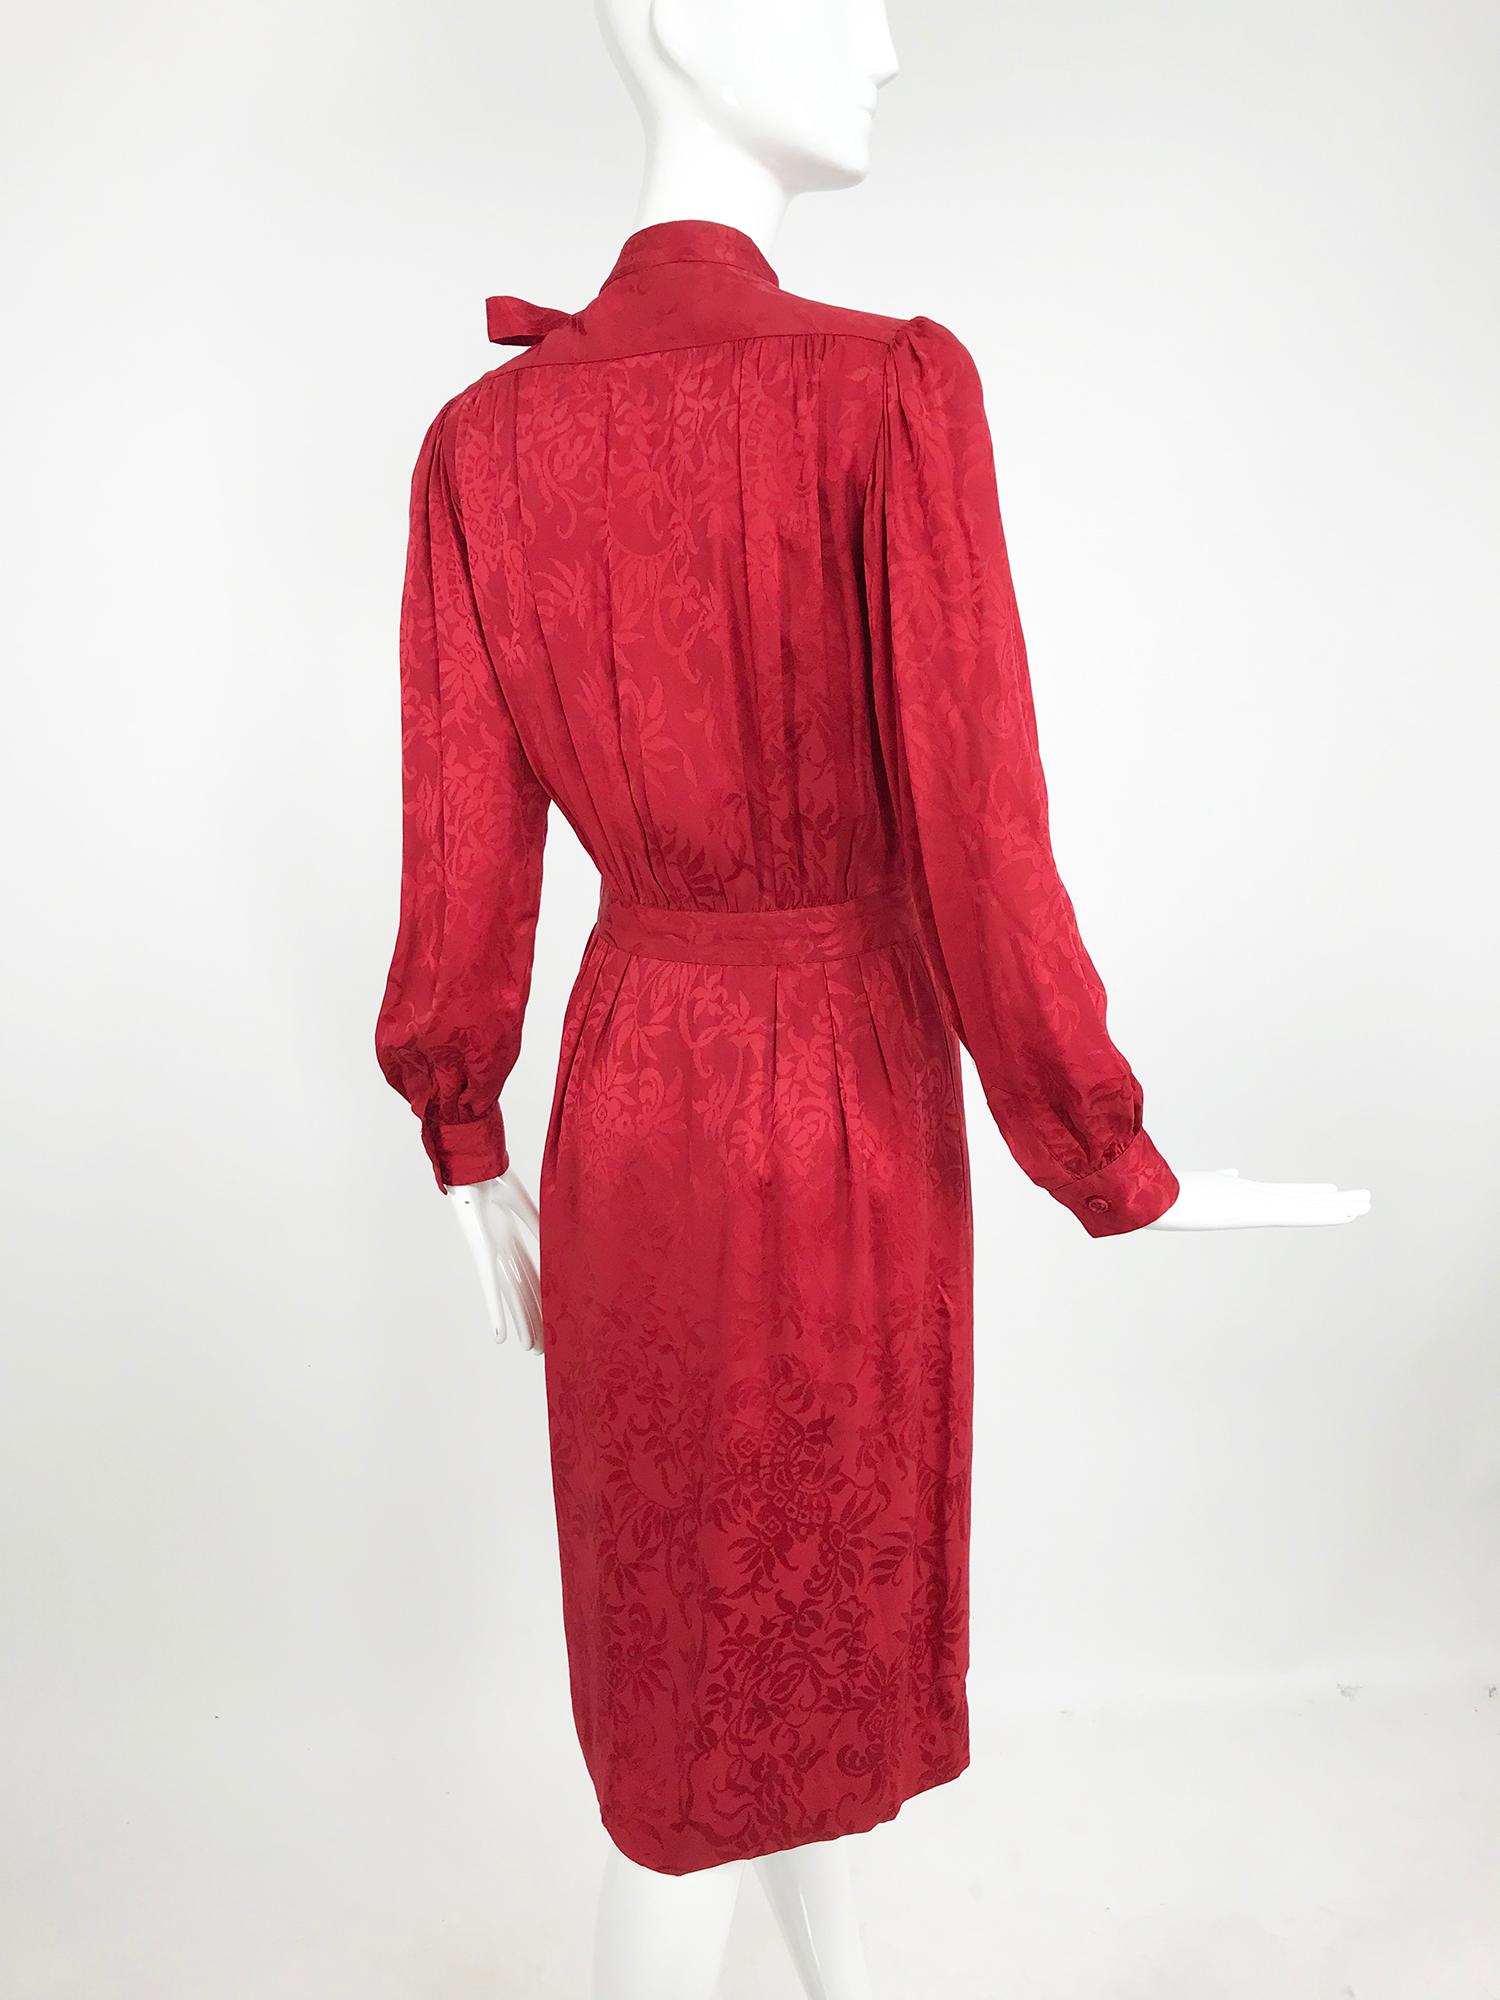 Yves Saint Laurent Red Silk Jacquard Bow Tie Dress 1970s 5